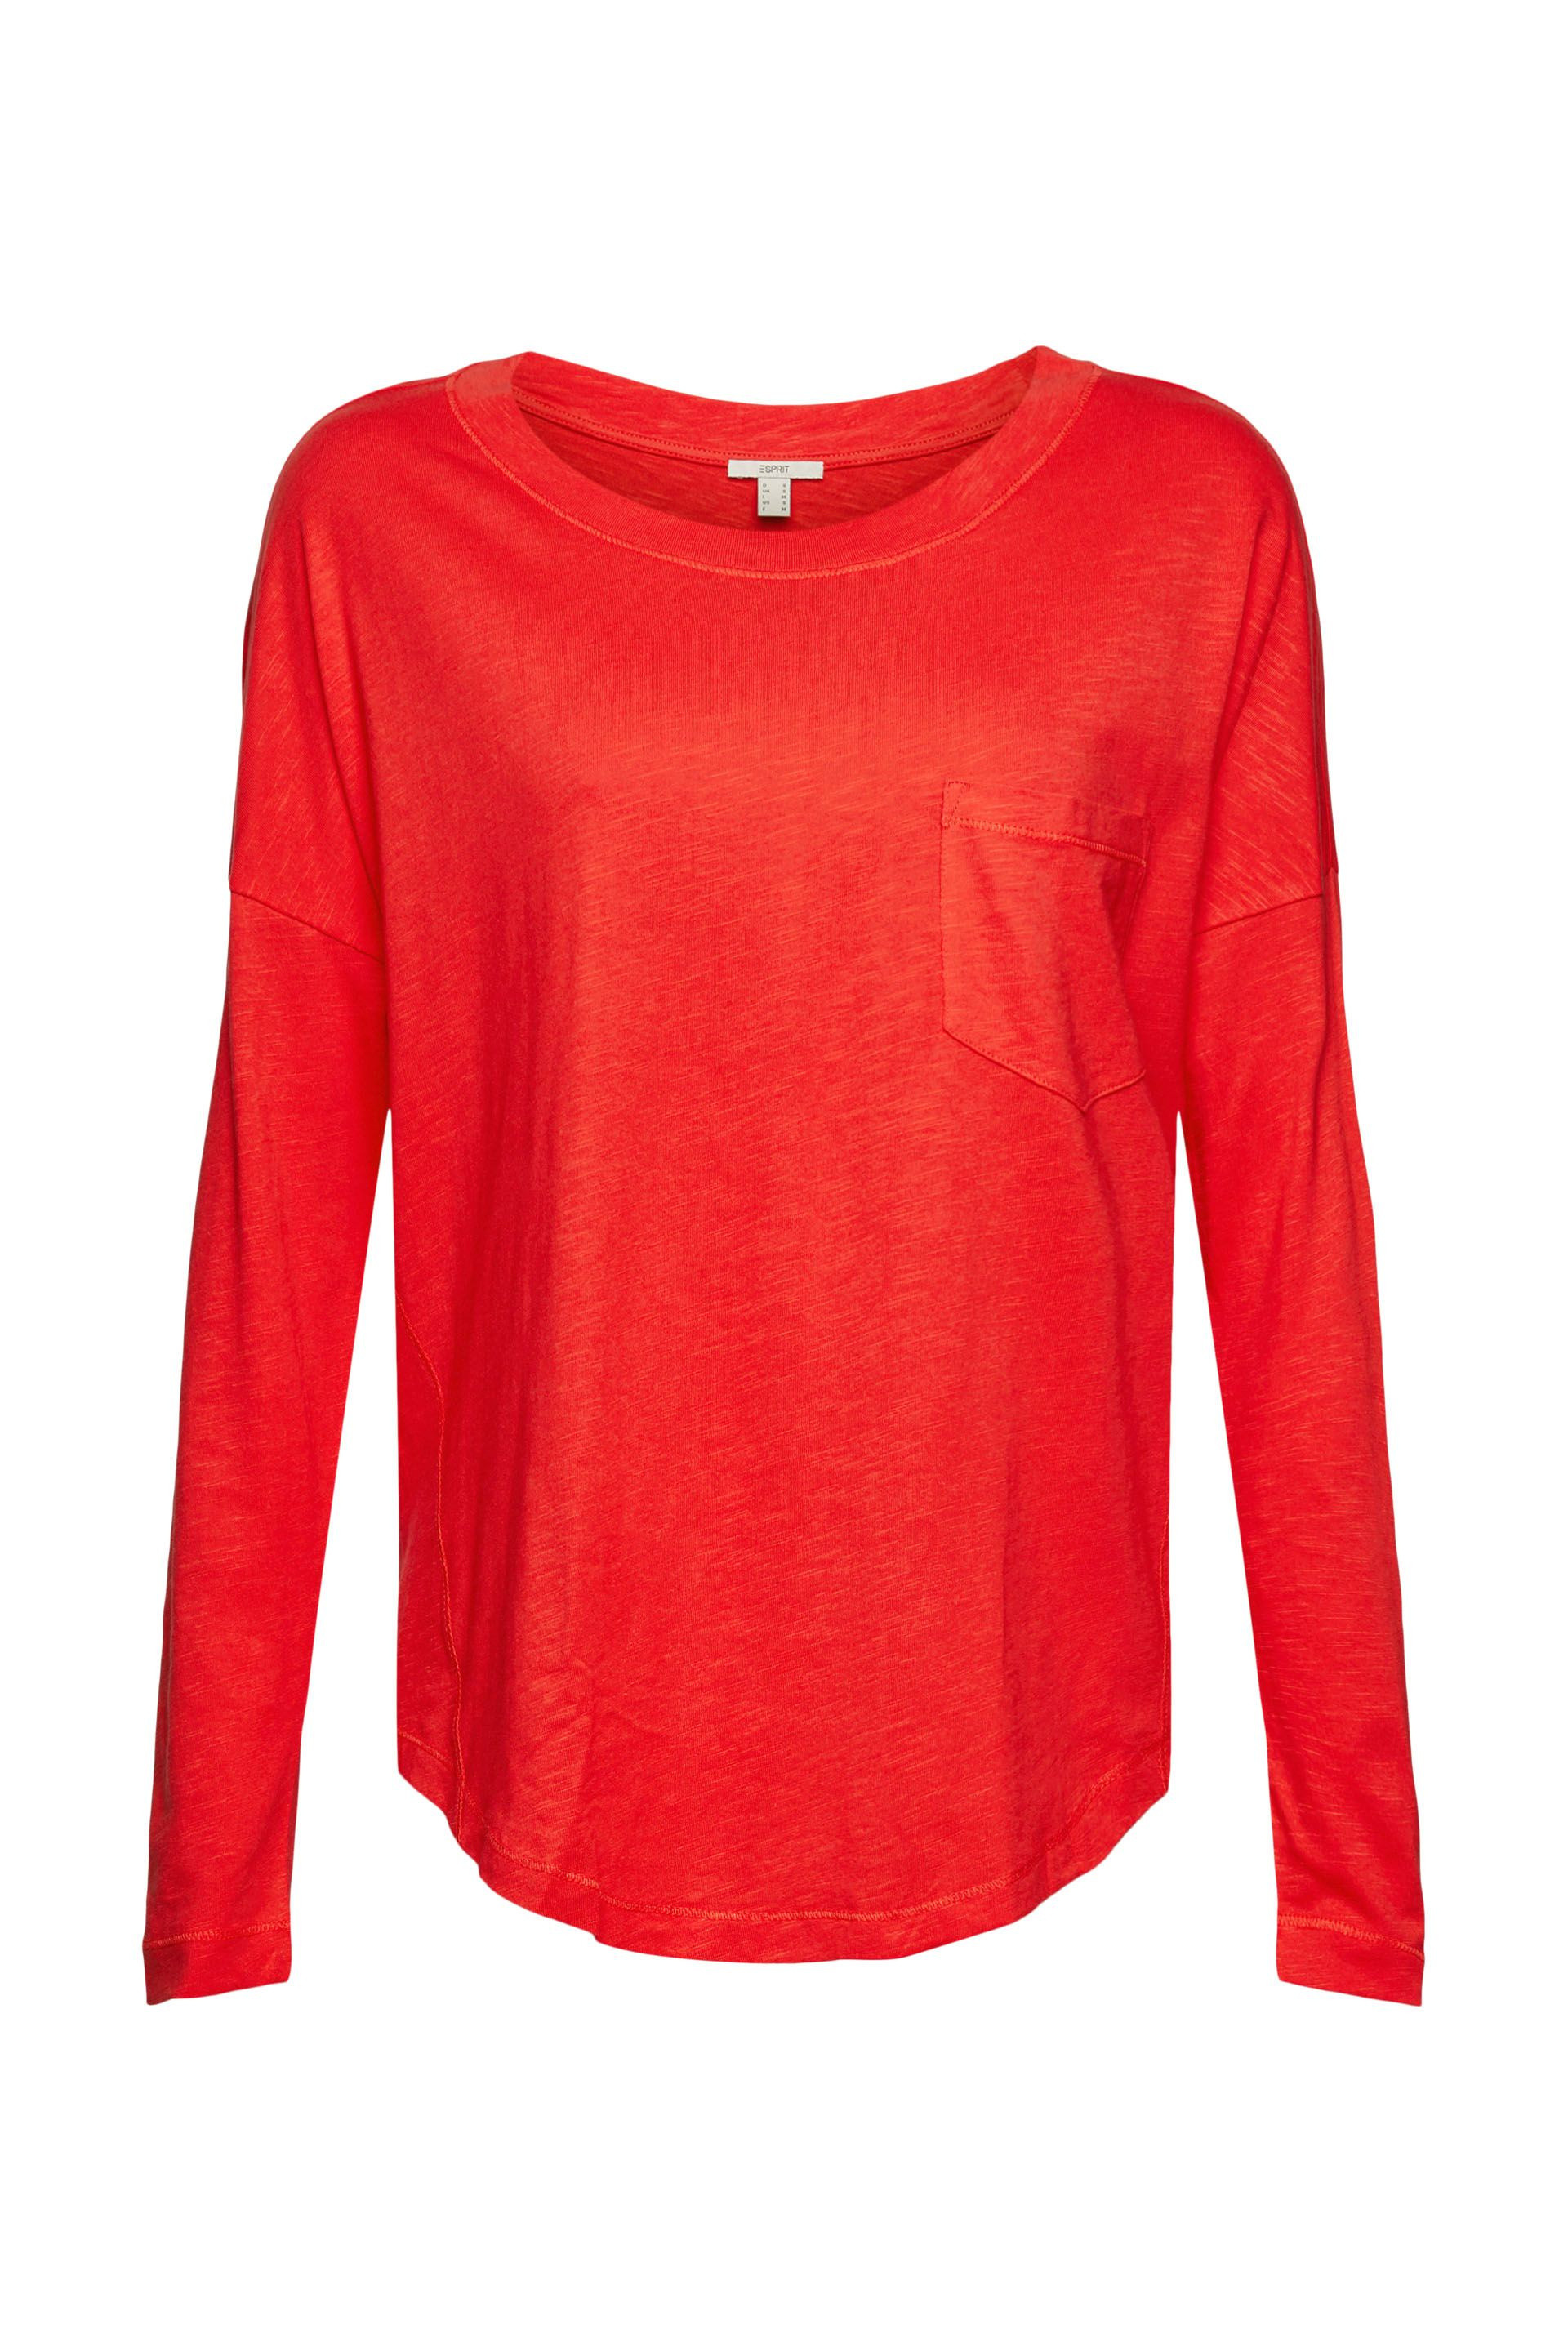 Long-sleeved T-shirt with pocket, Orange, large image number 0